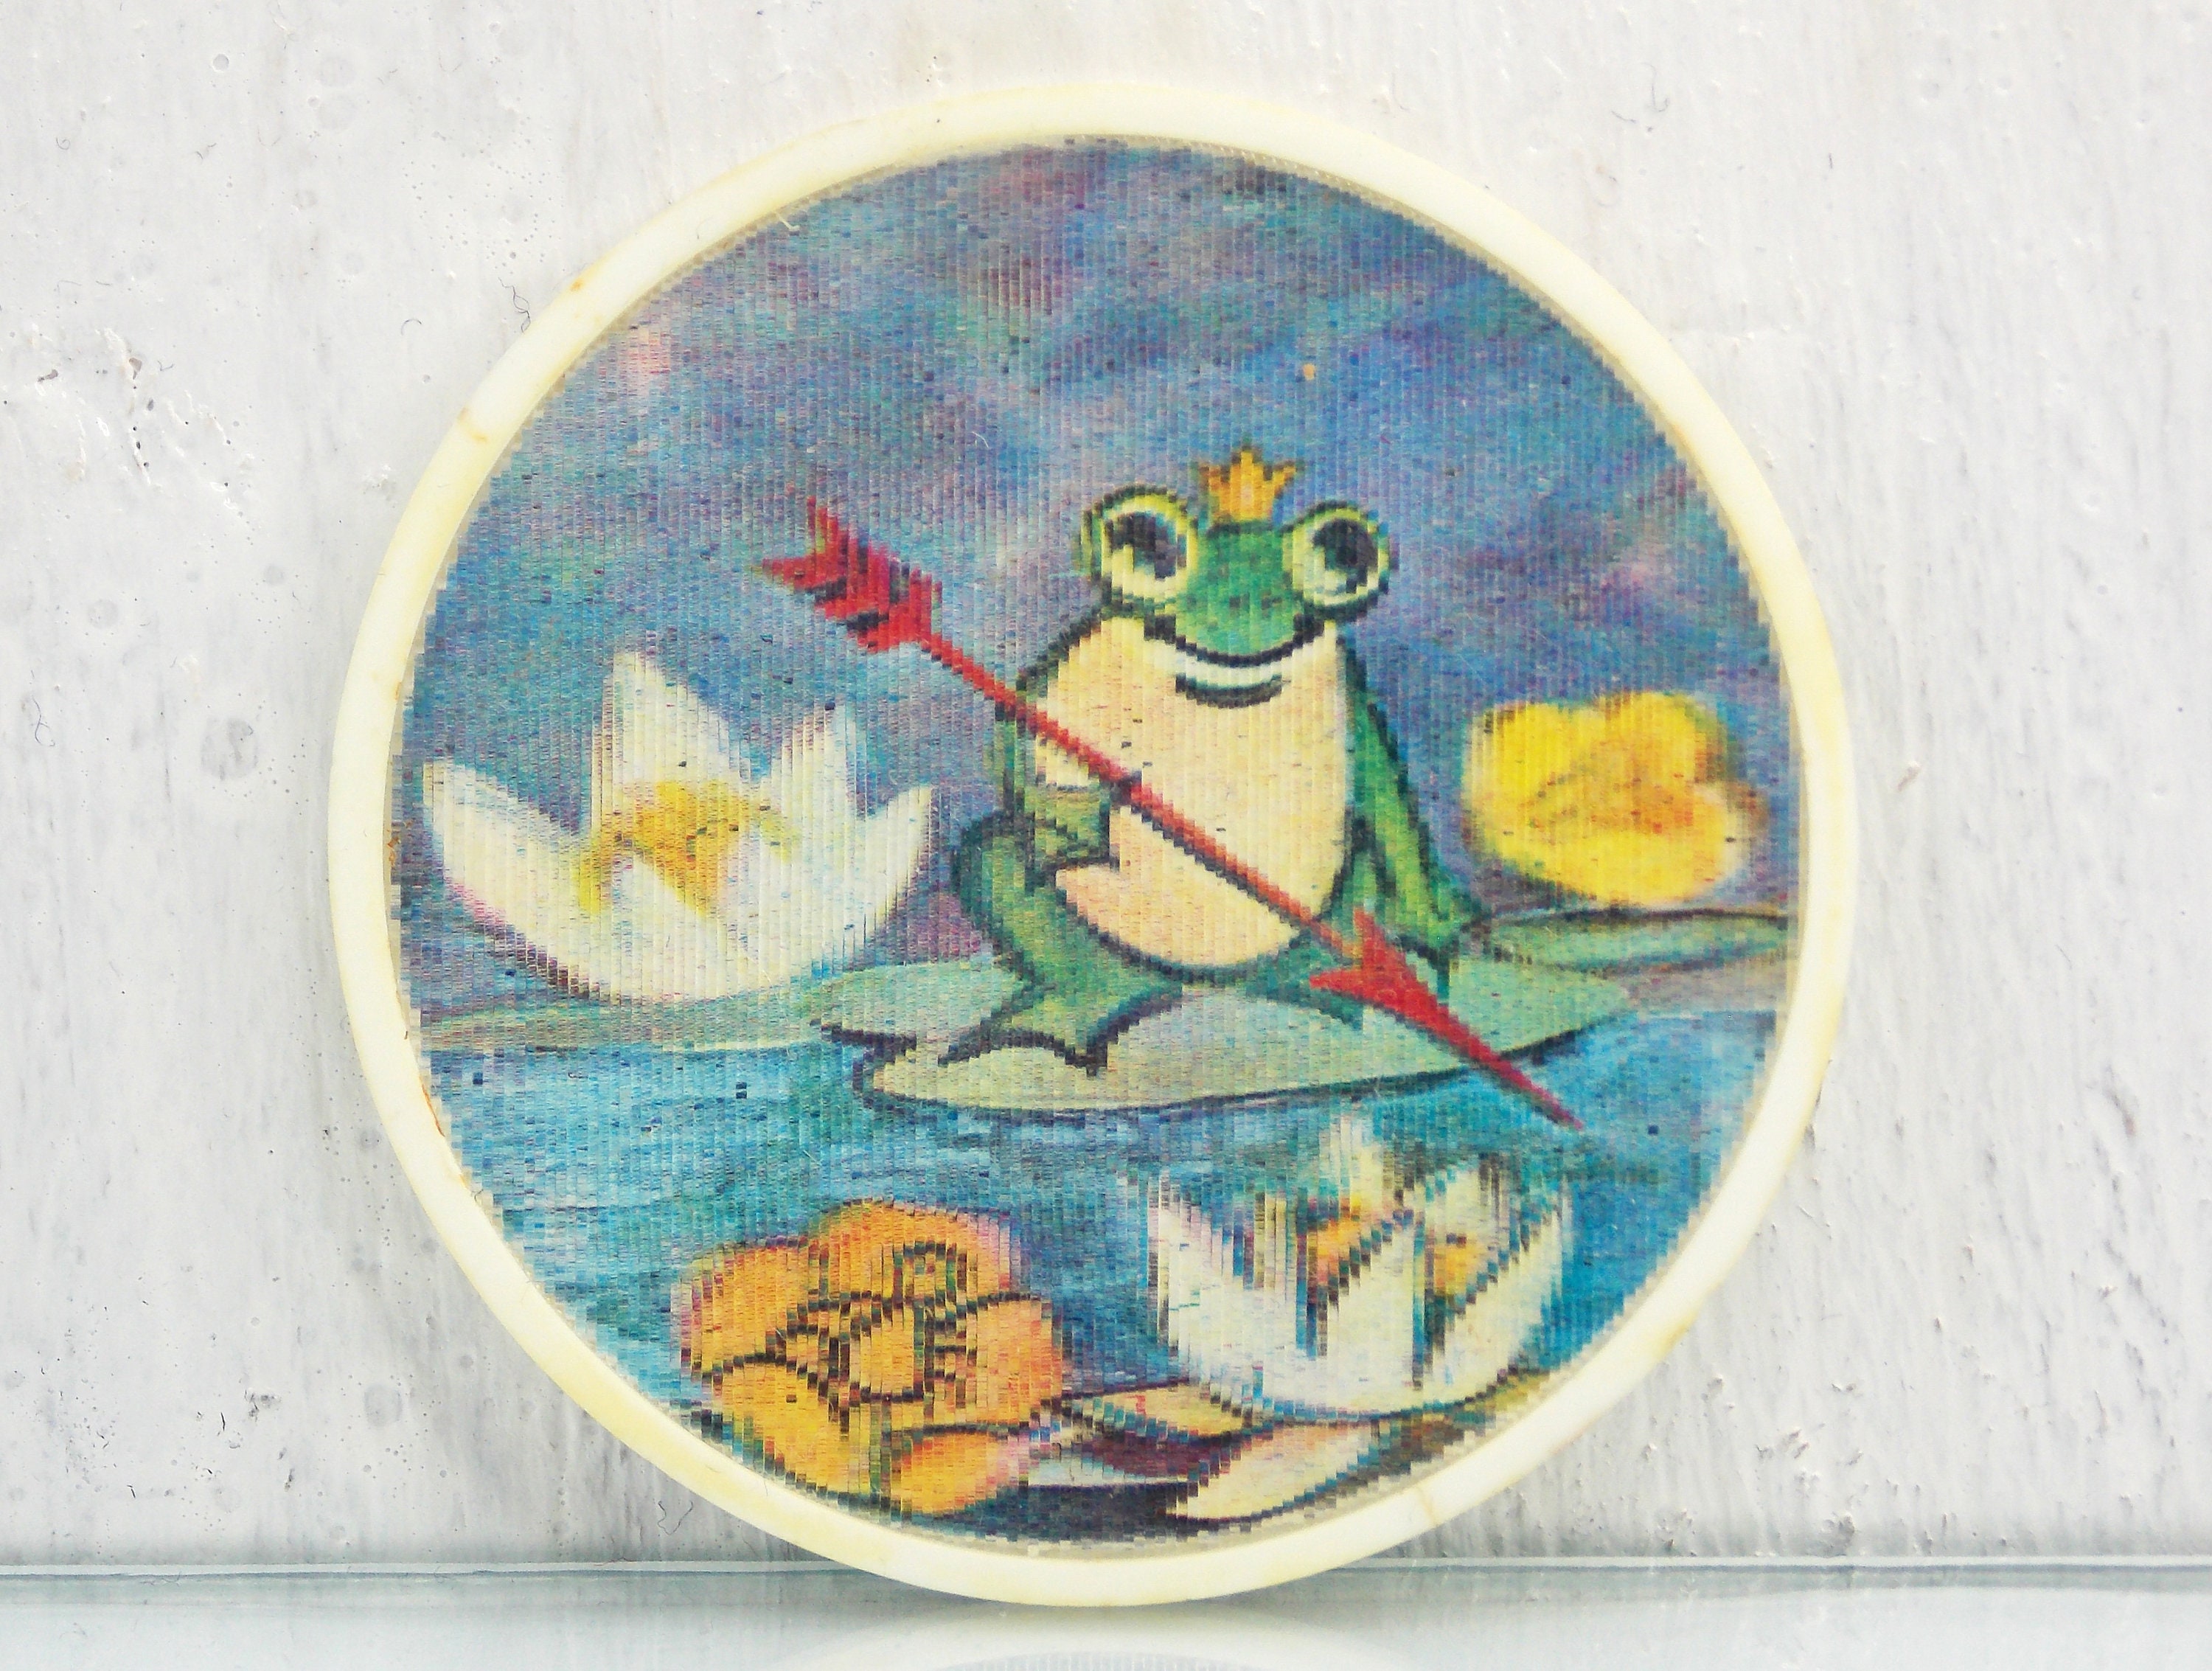 AR Frog Pin – Studio 2is3